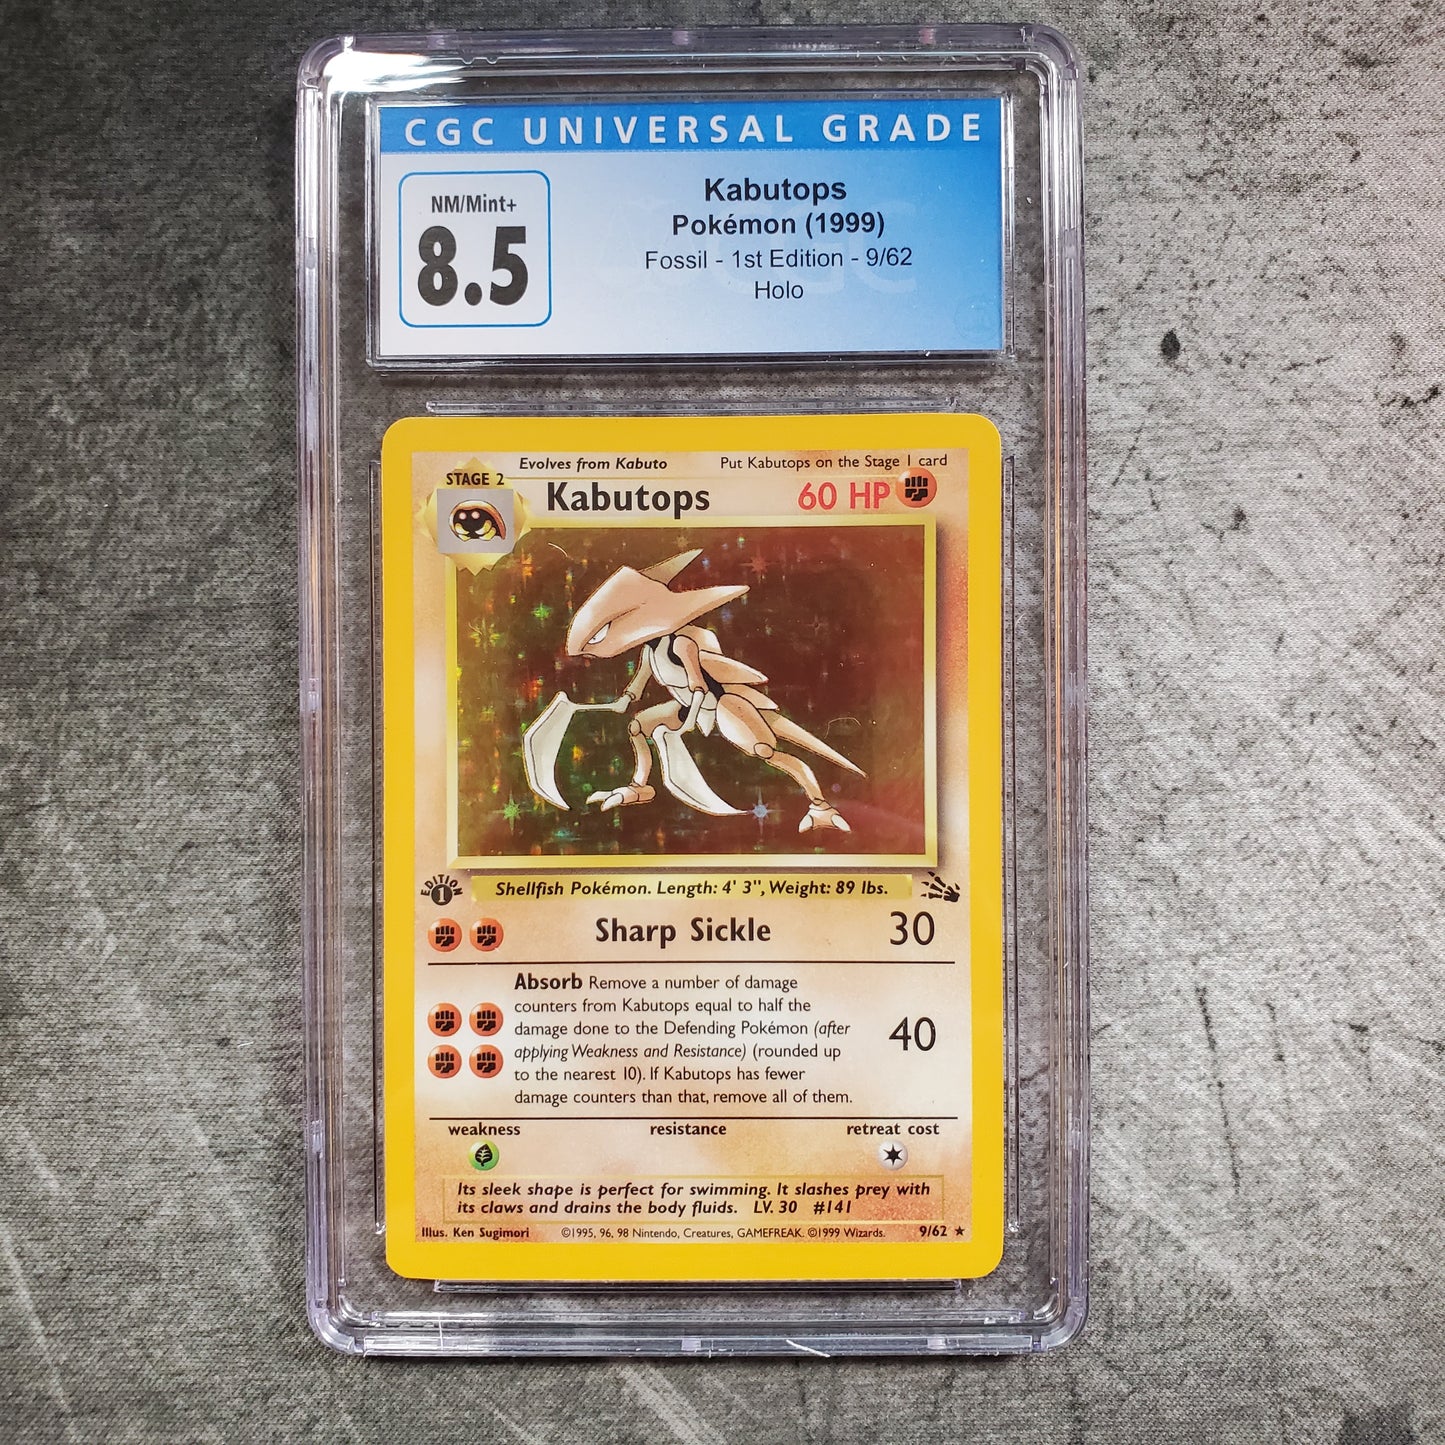 CGC 8.5 Kabutops 9/62 Holo Pokémon Fossil 1st Edition